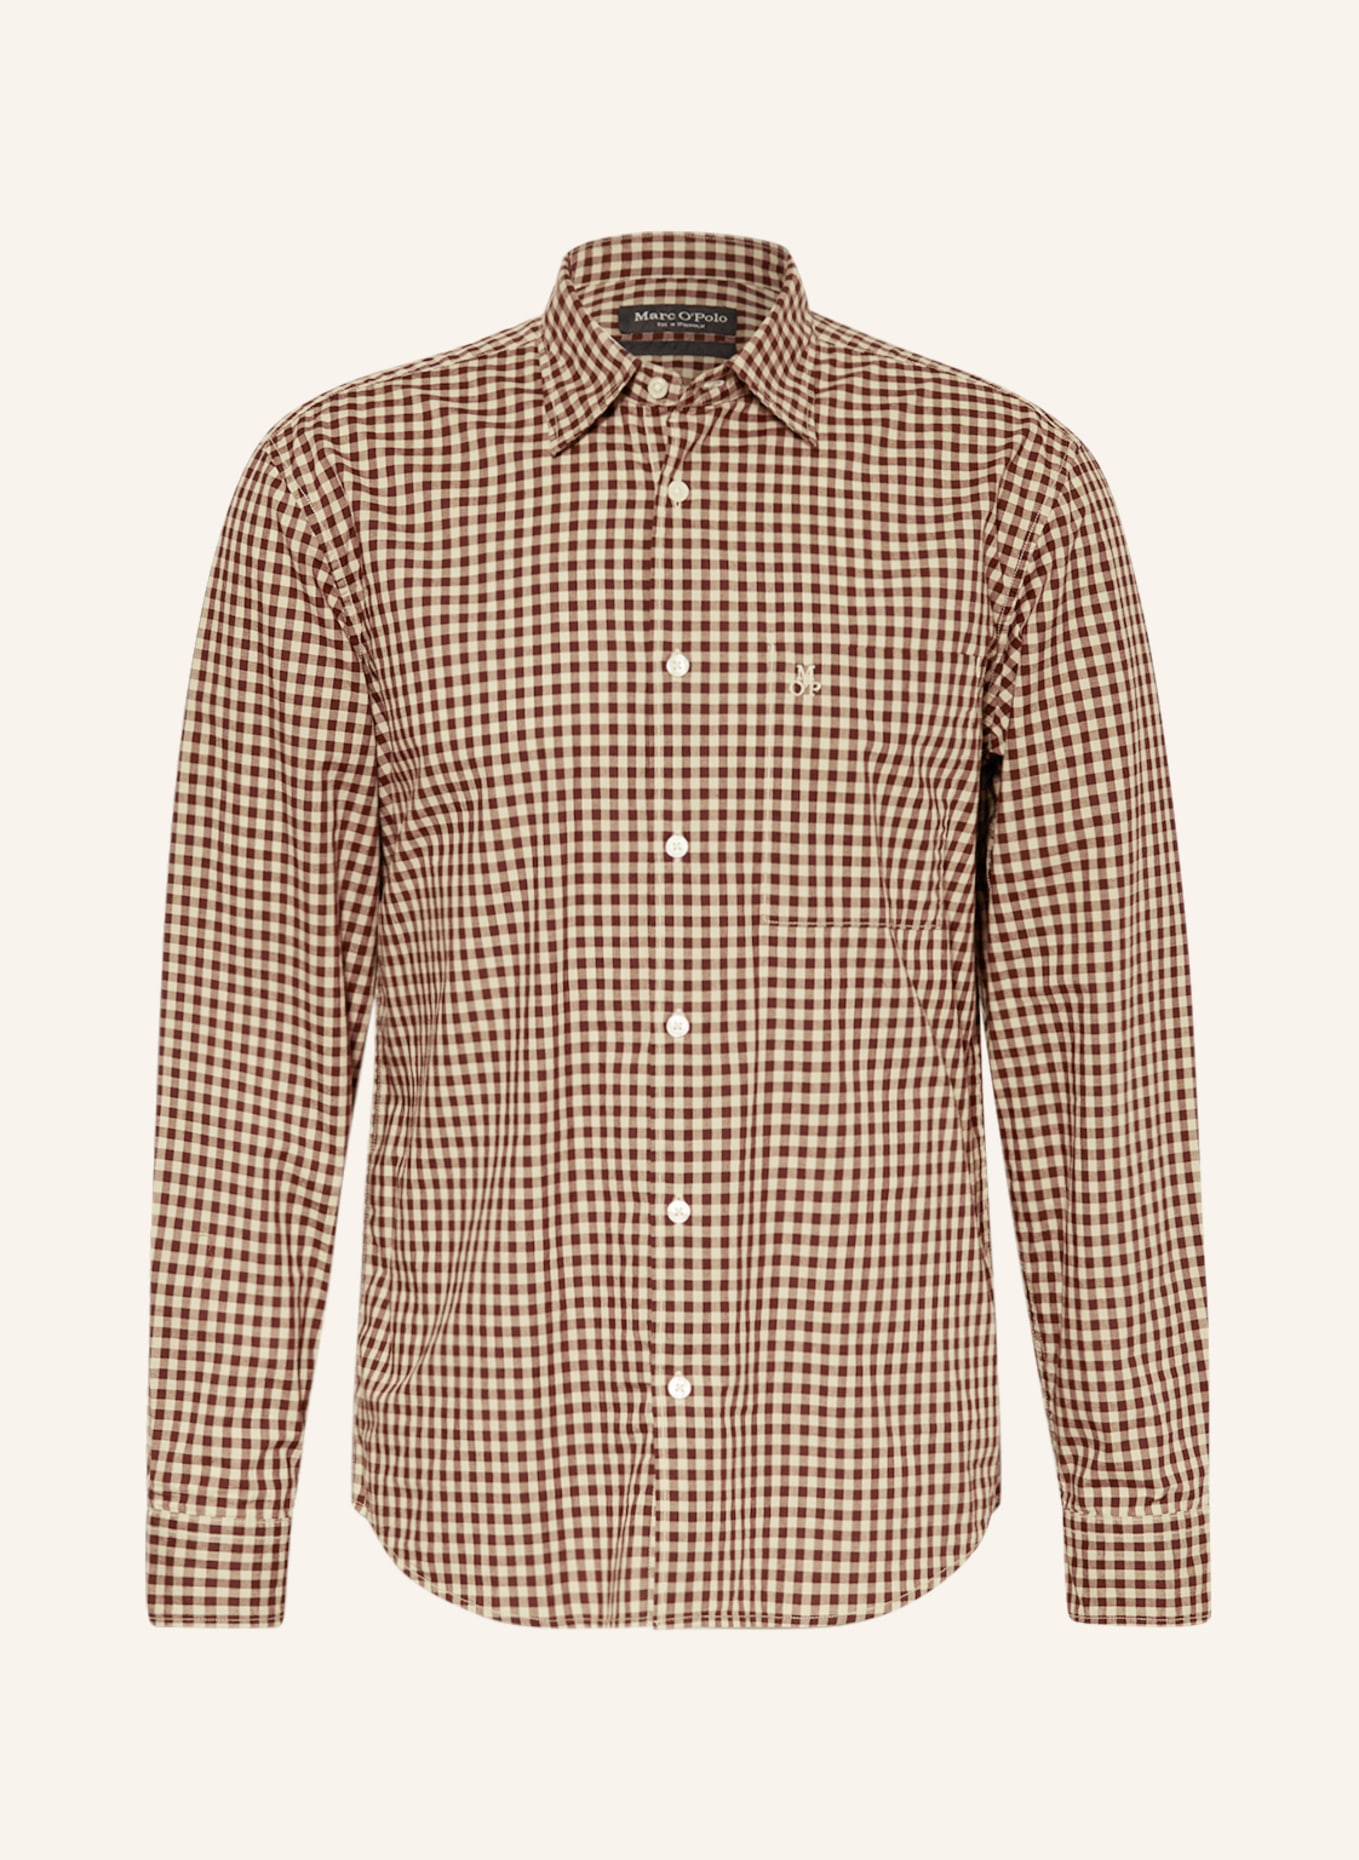 Marc O'Polo Shirt regular fit, Color: DARK BROWN/ LIGHT BROWN (Image 1)